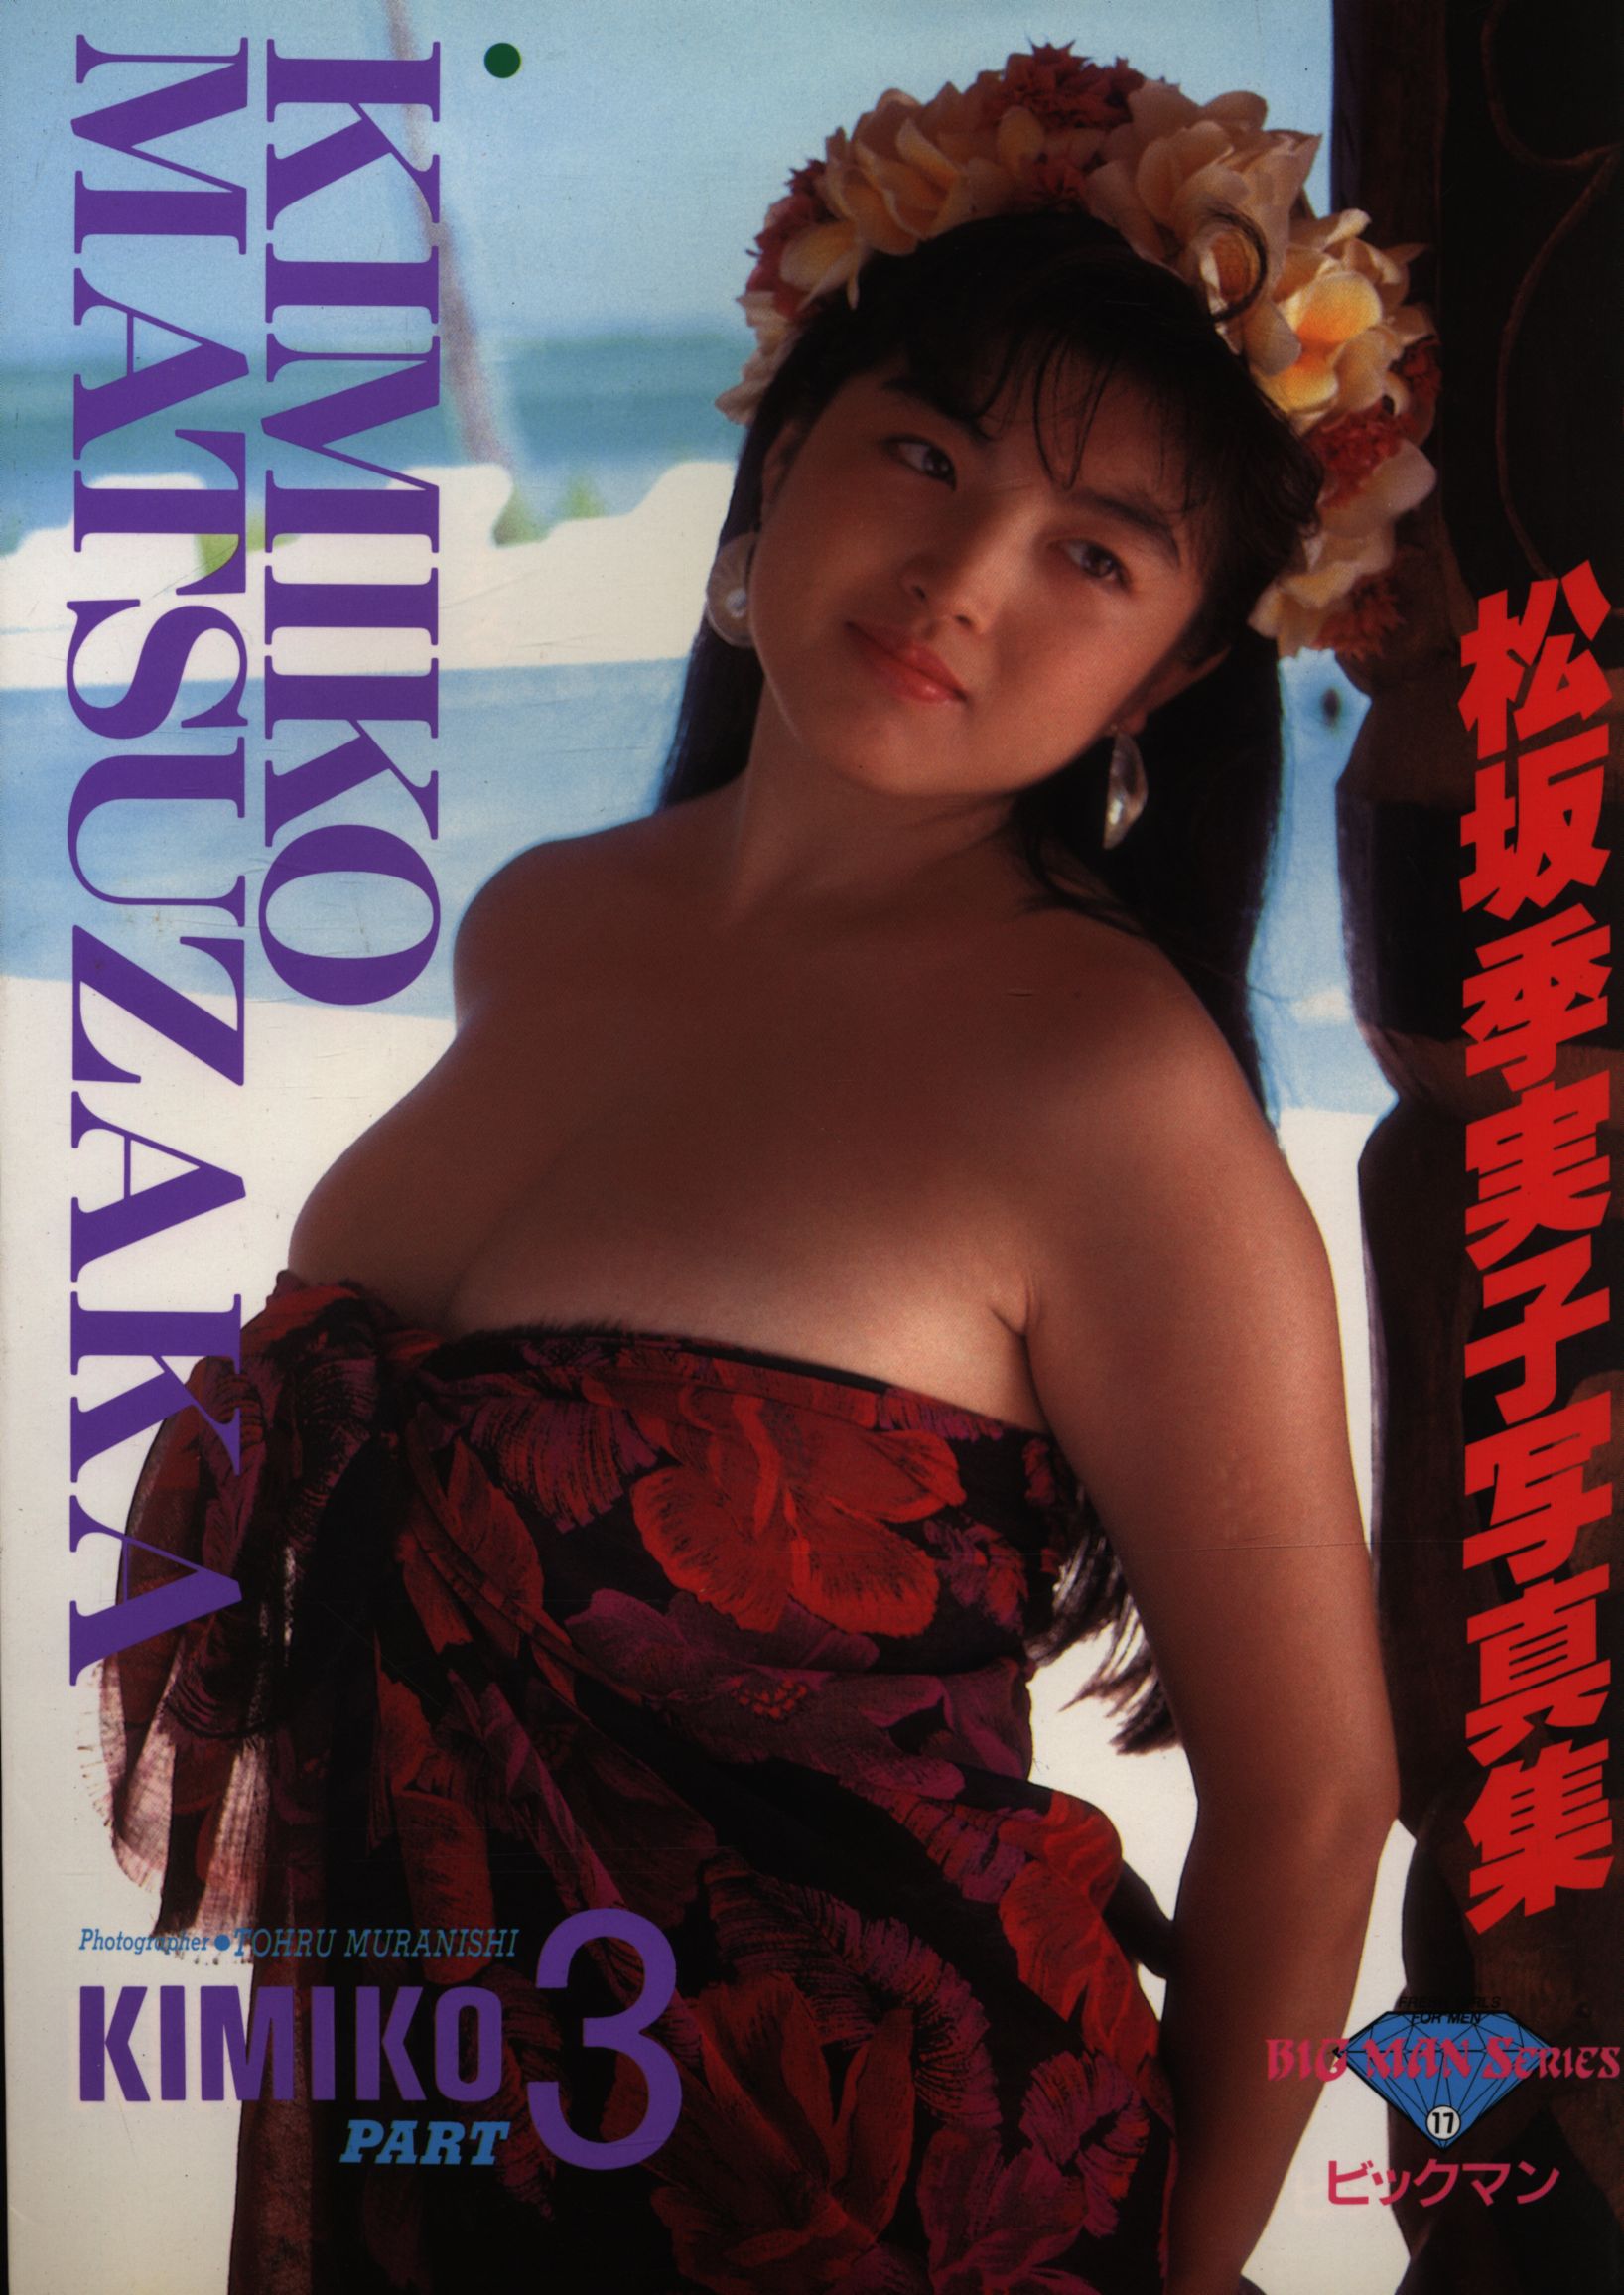 Kimiko matsuzaka